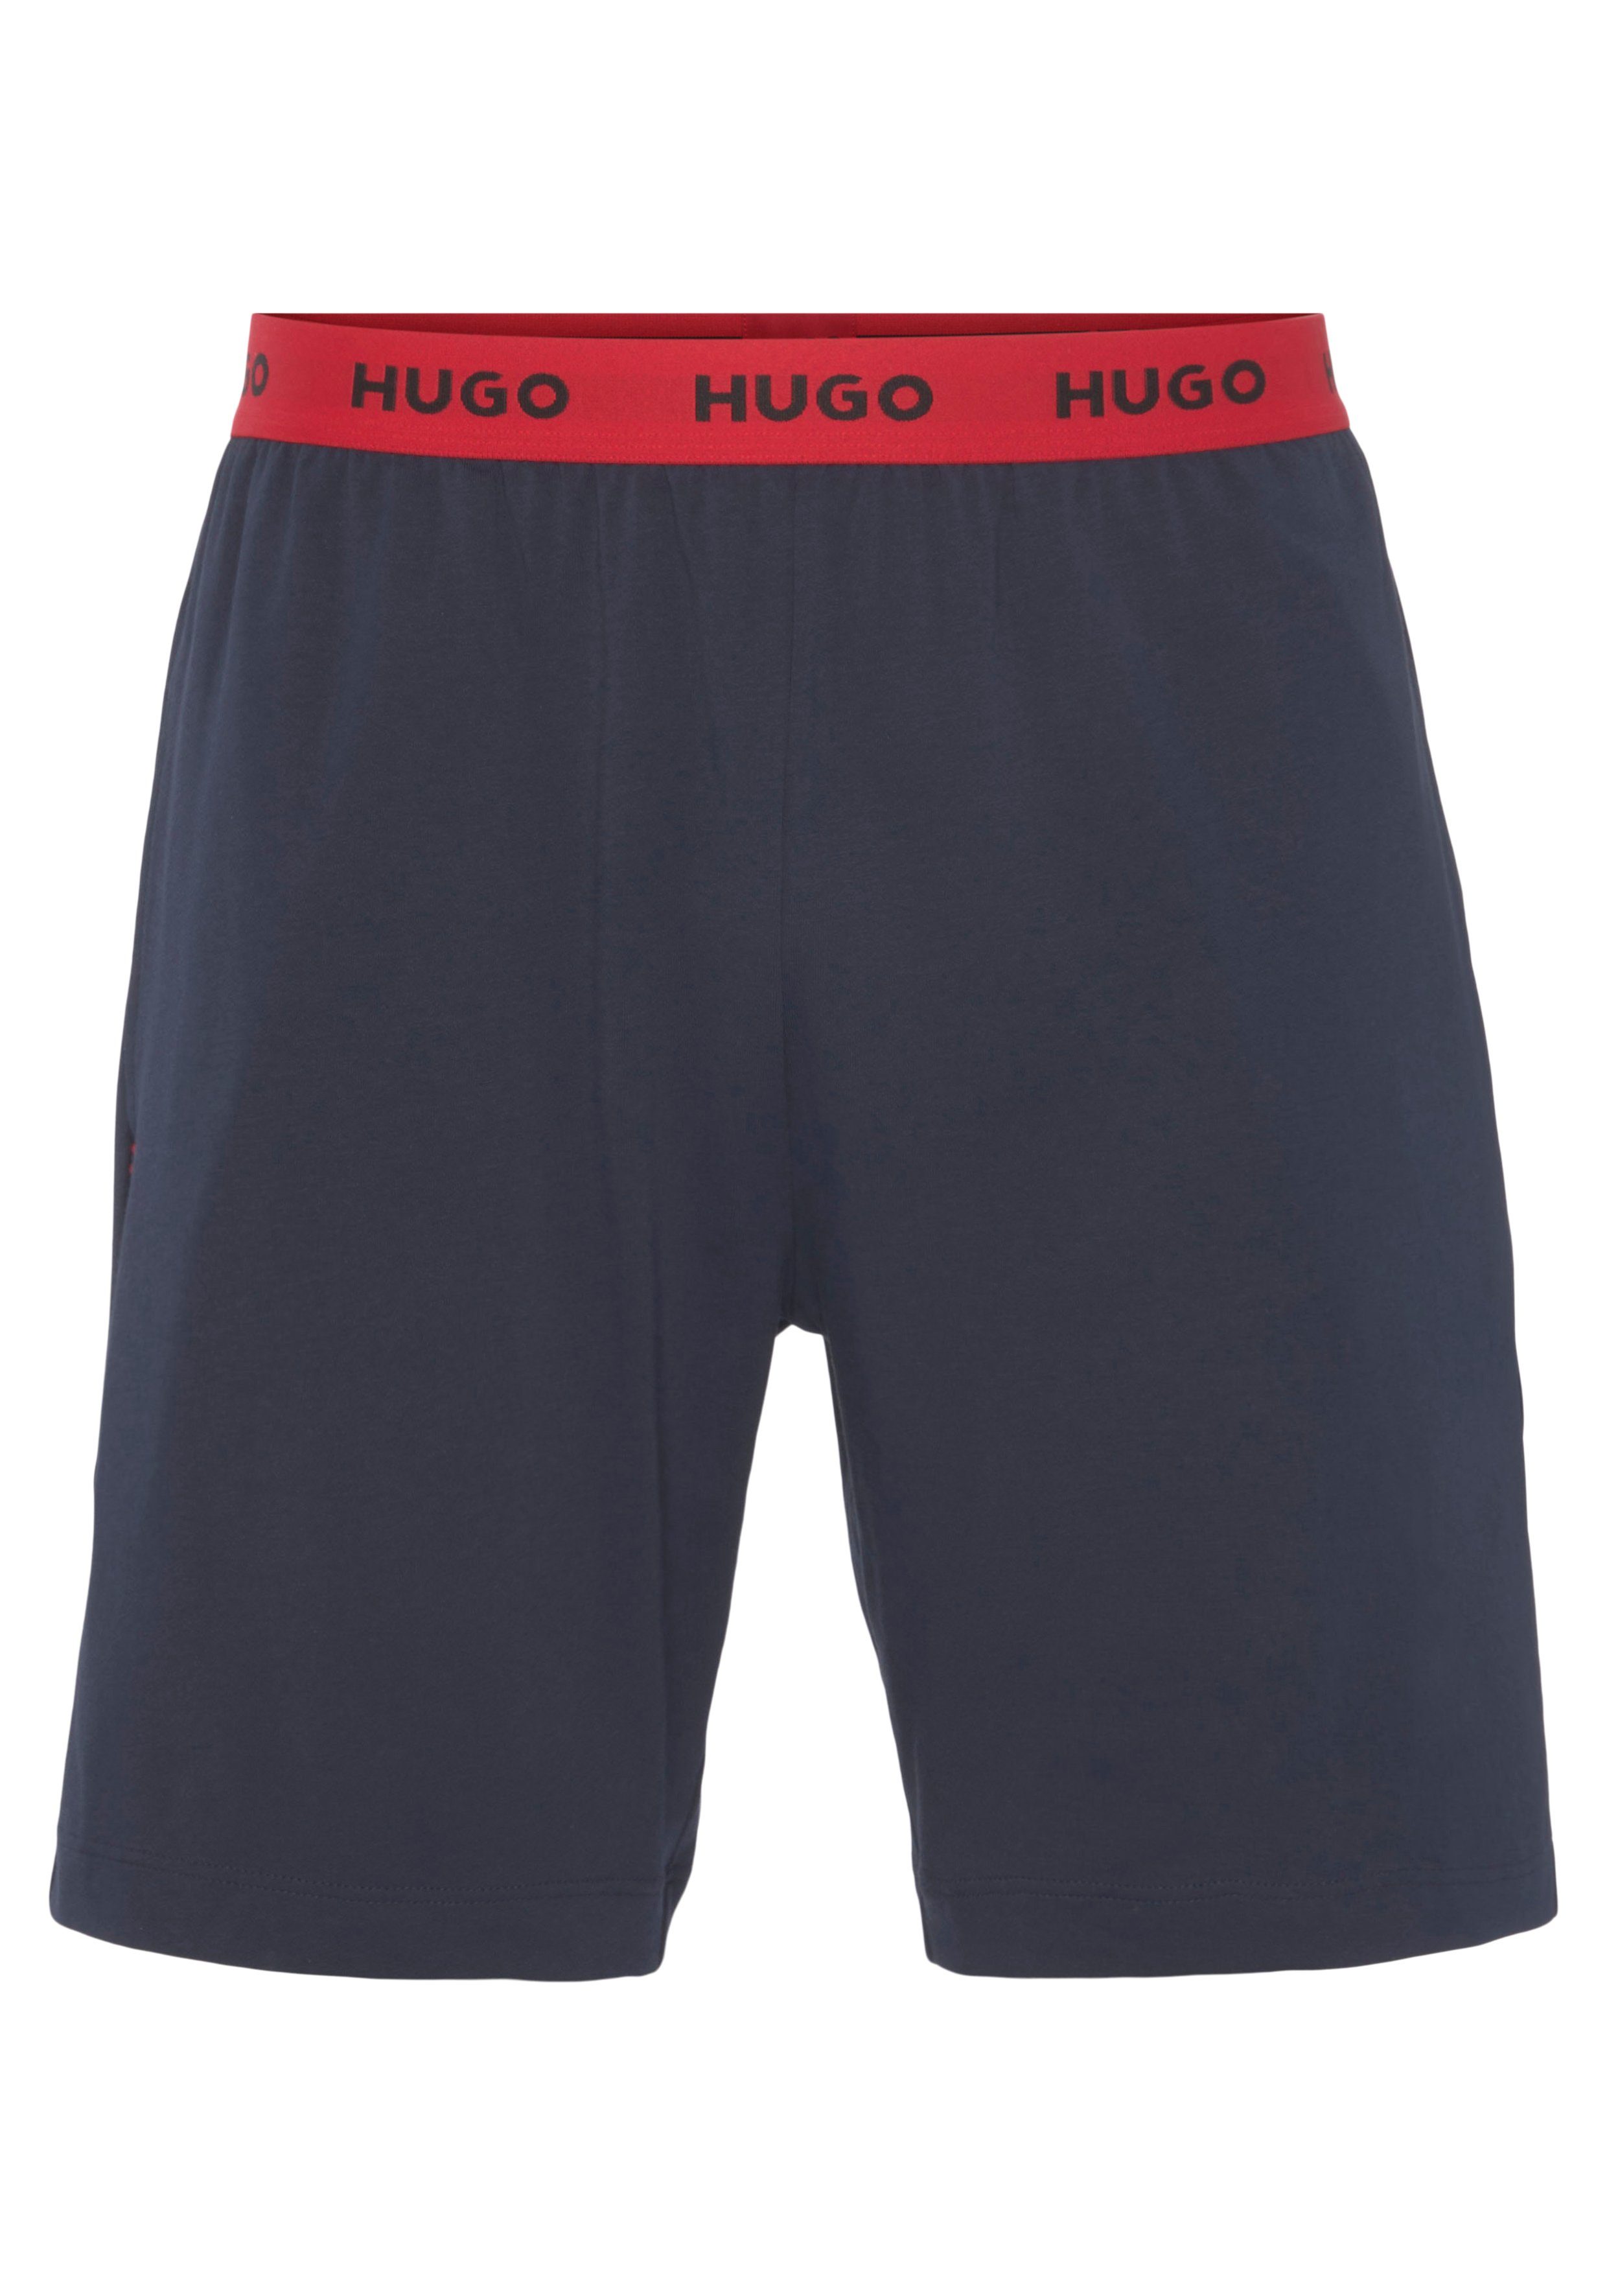 HUGO Logobund dark HUGO 405 Pant Sweatshorts Short Linked mit blue